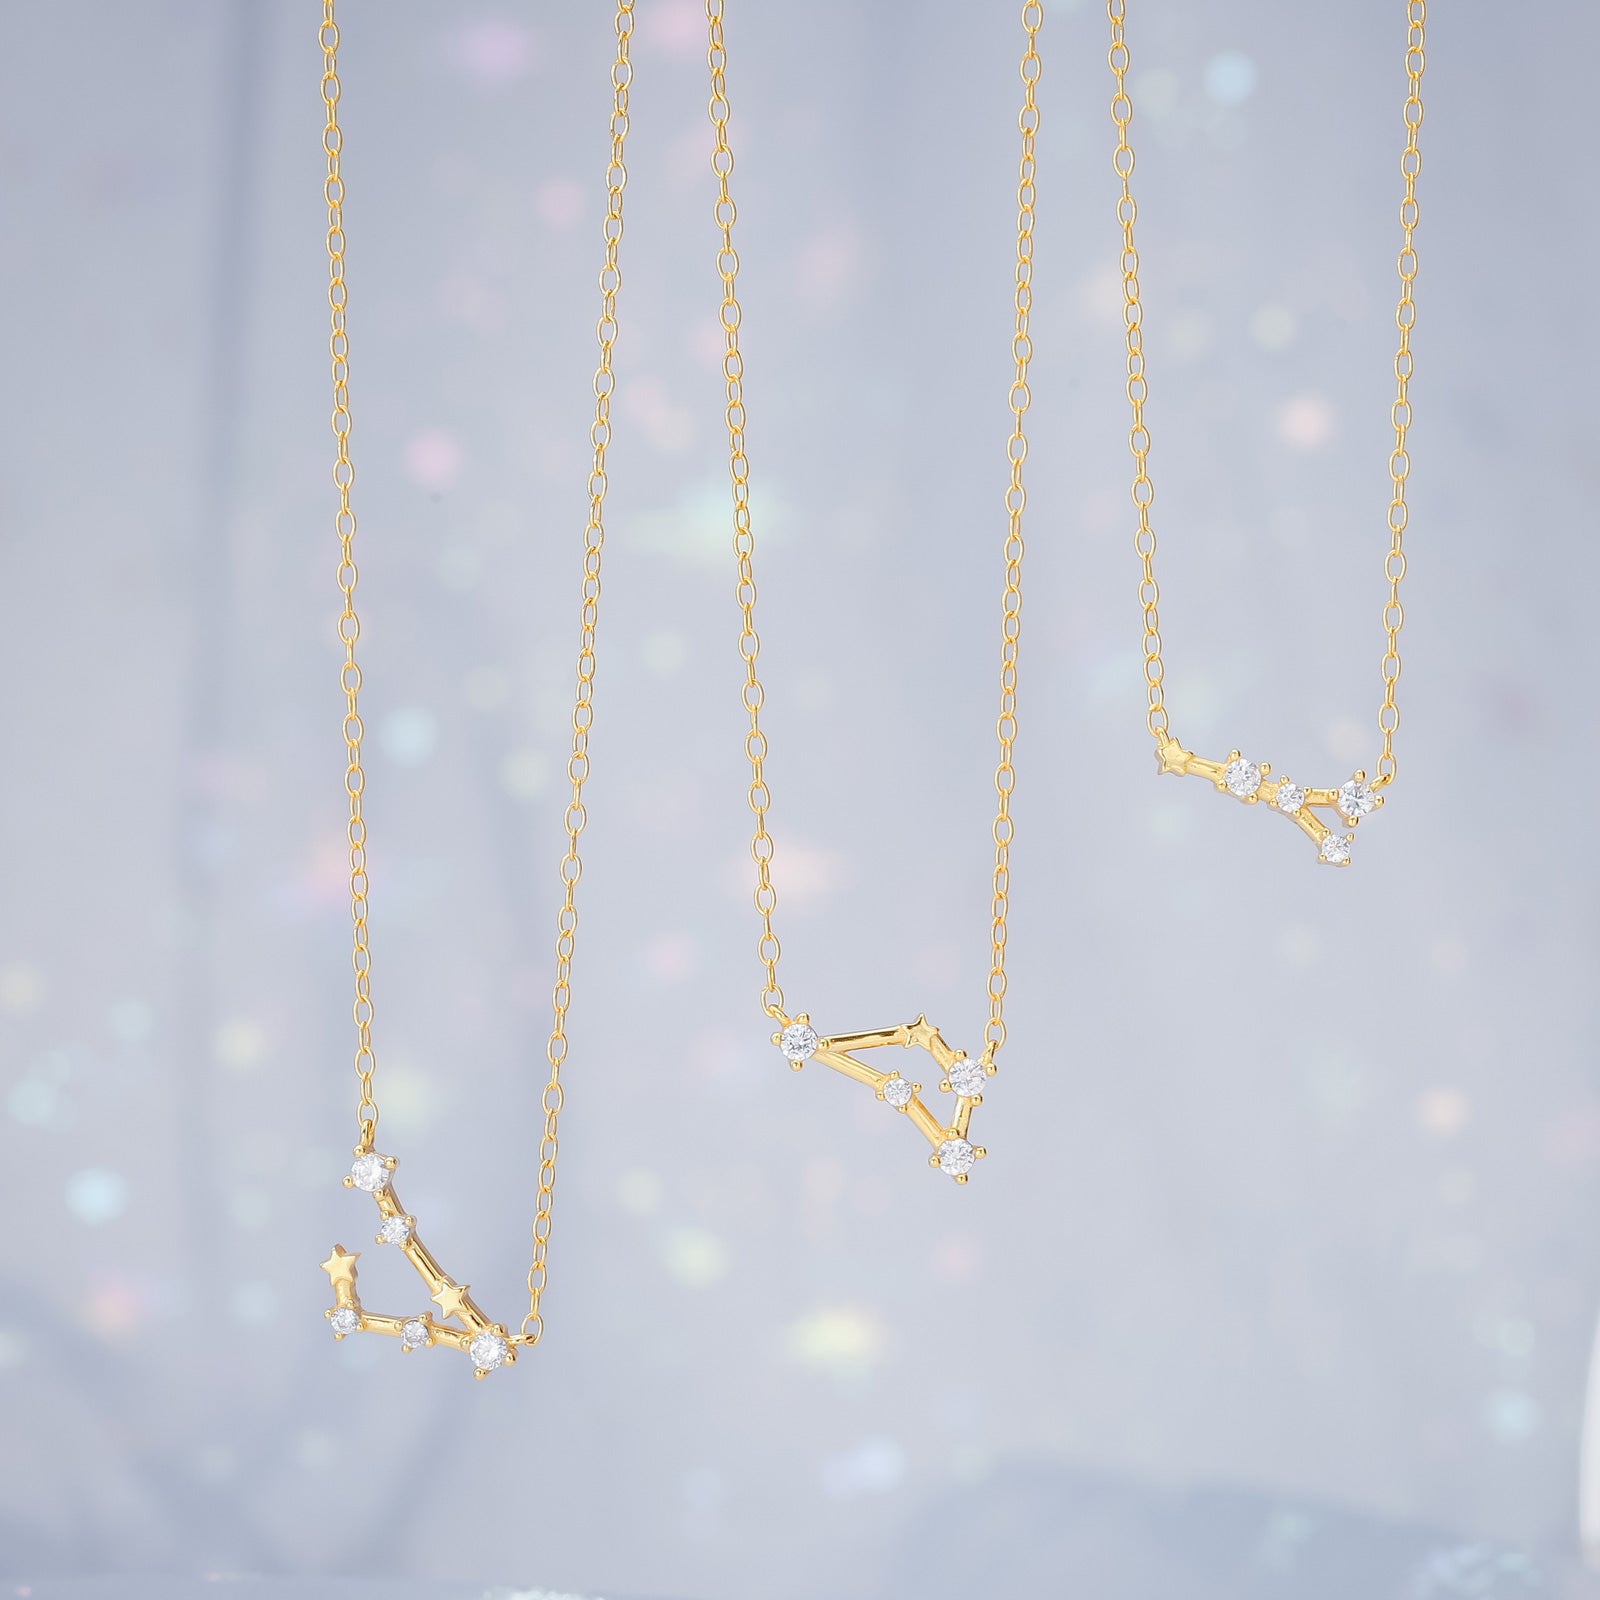 Silver Pisces Constellation Necklace Set